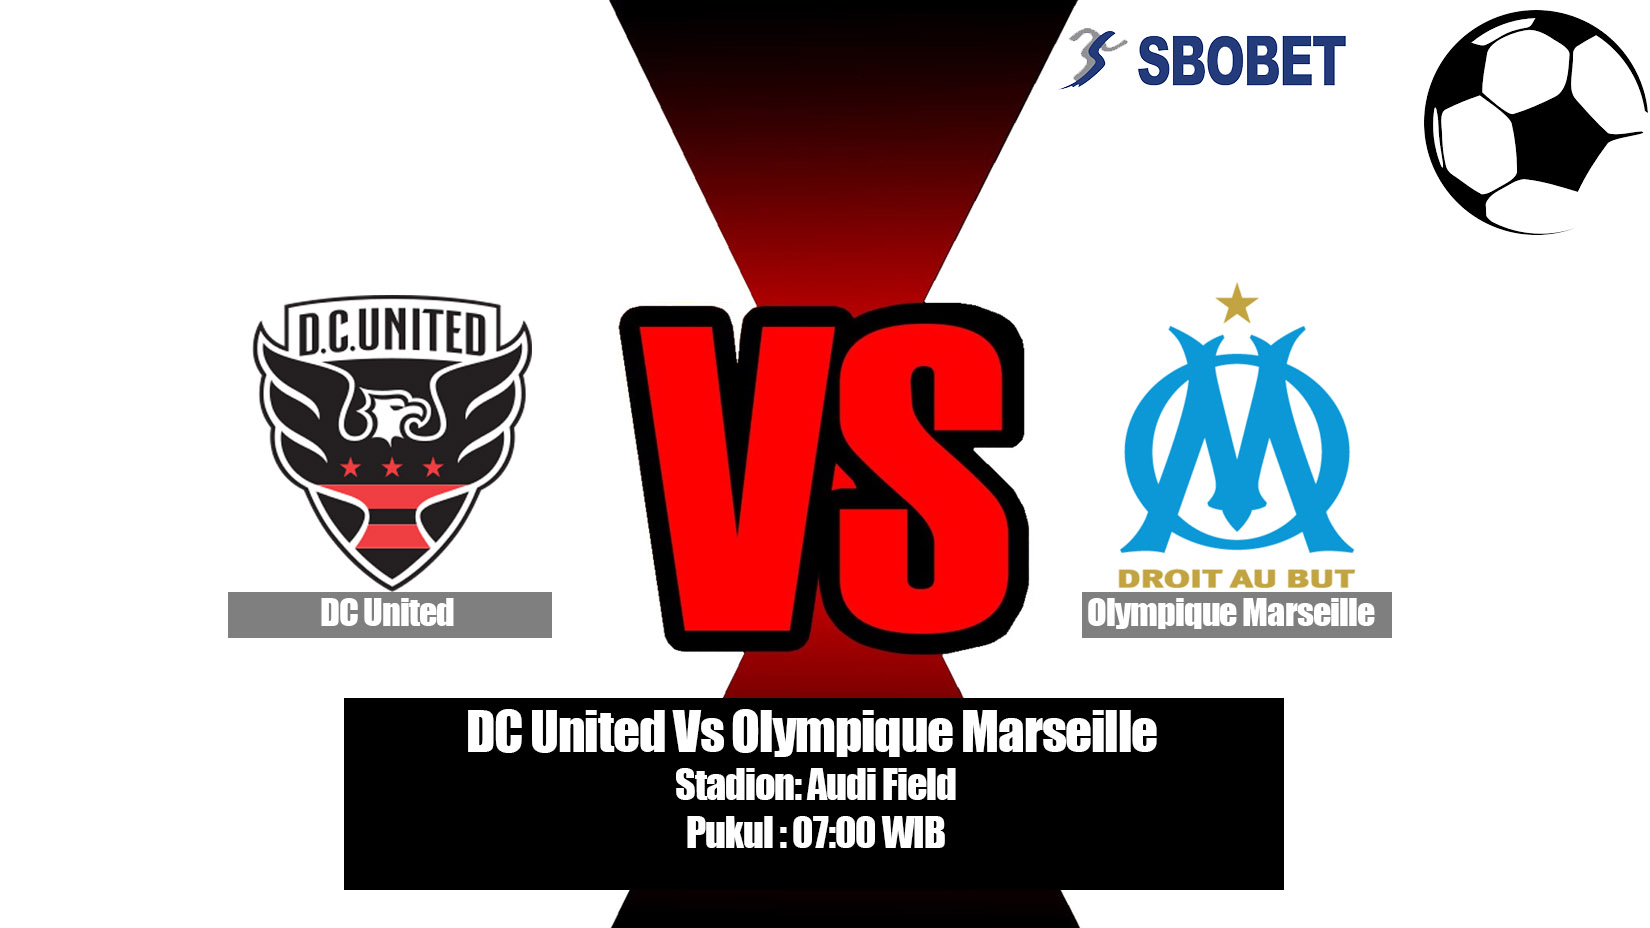 Prediksi Bola DC United Vs Olympique Marseille 24 Juli 2019